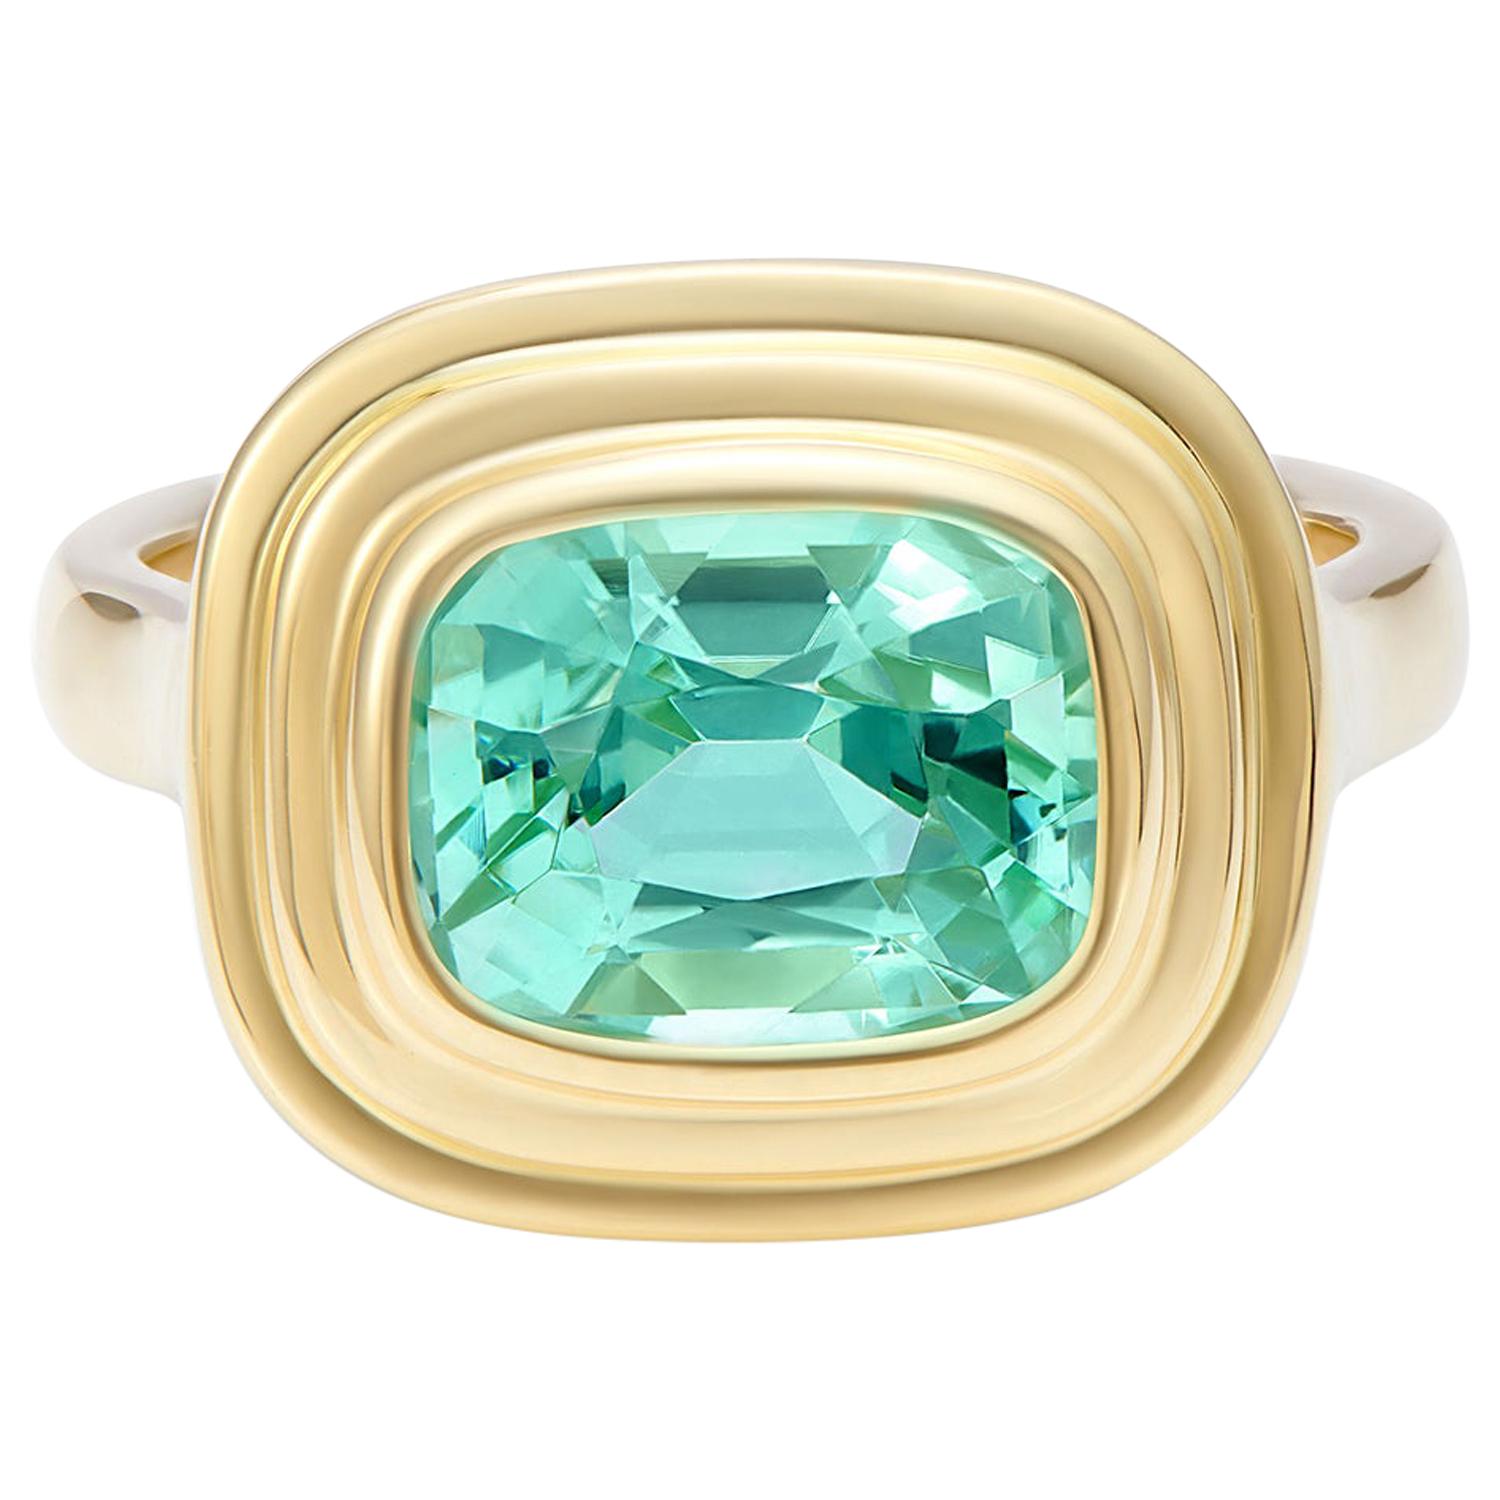 Minka Jewels 18 Karat Gold, 2.70 Carat Blue or Green Tourmaline Cushion Cut Ring